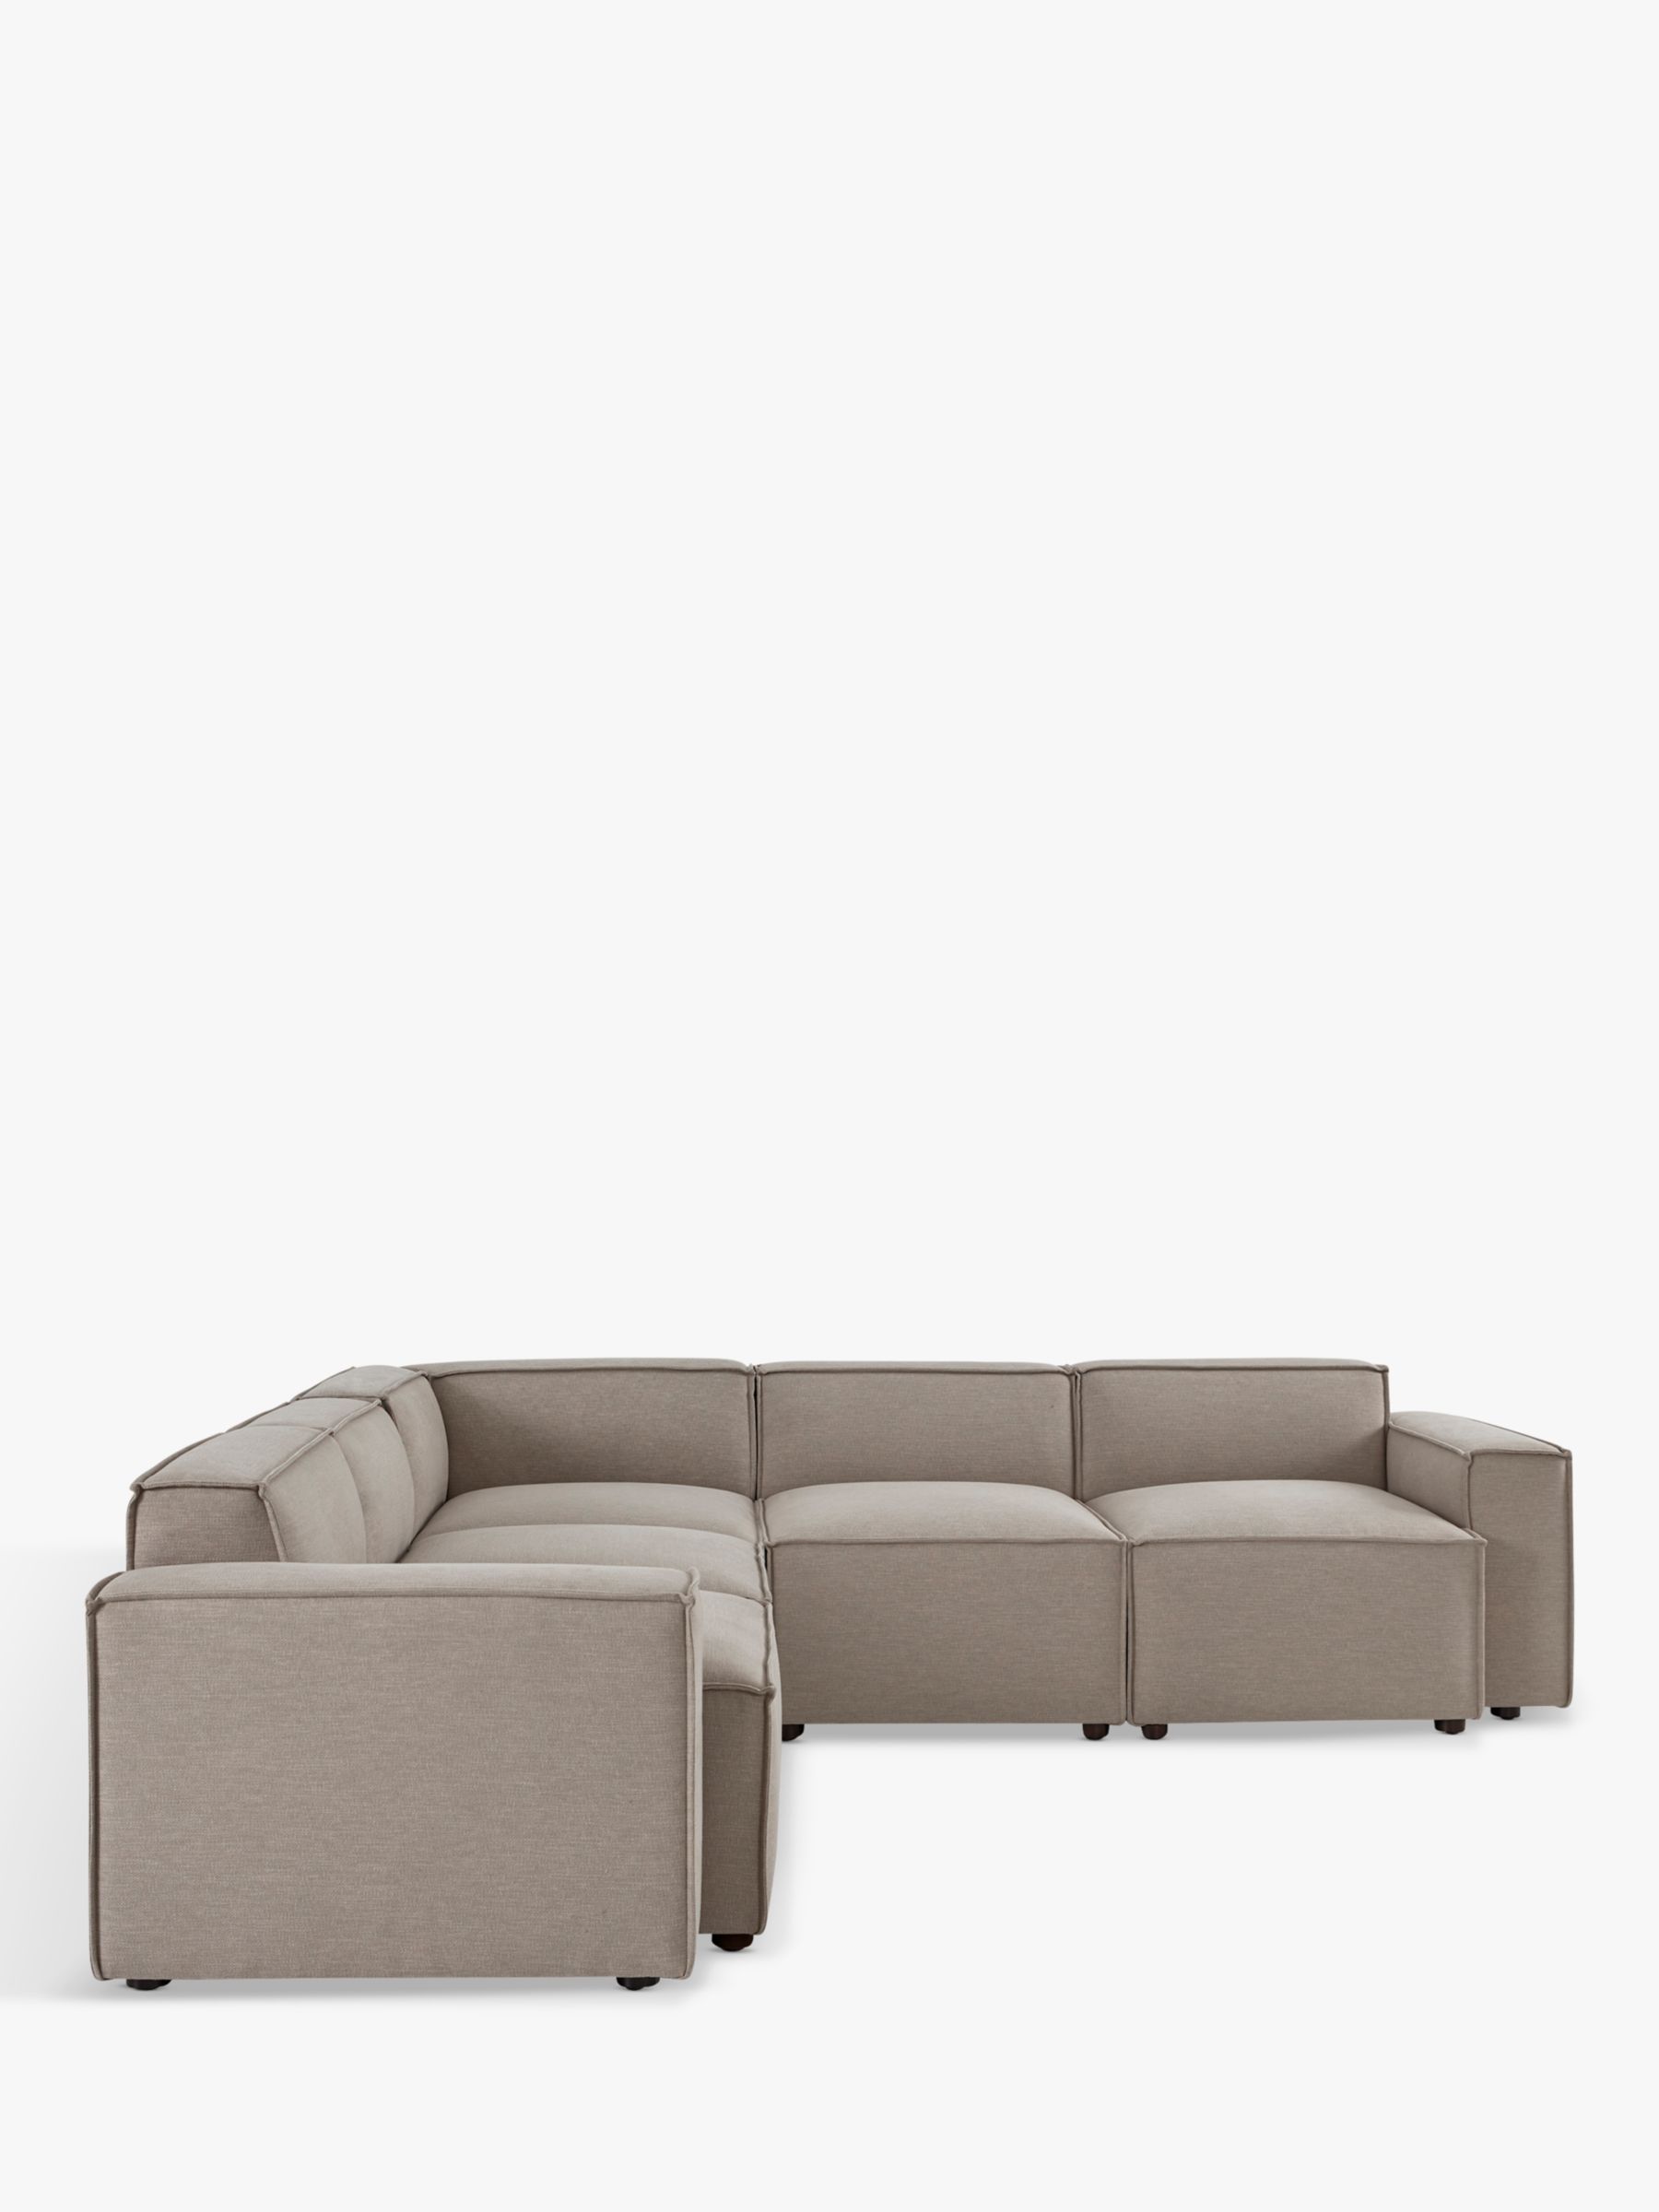 Photo of Swyft model 03 5 seater corner sofa